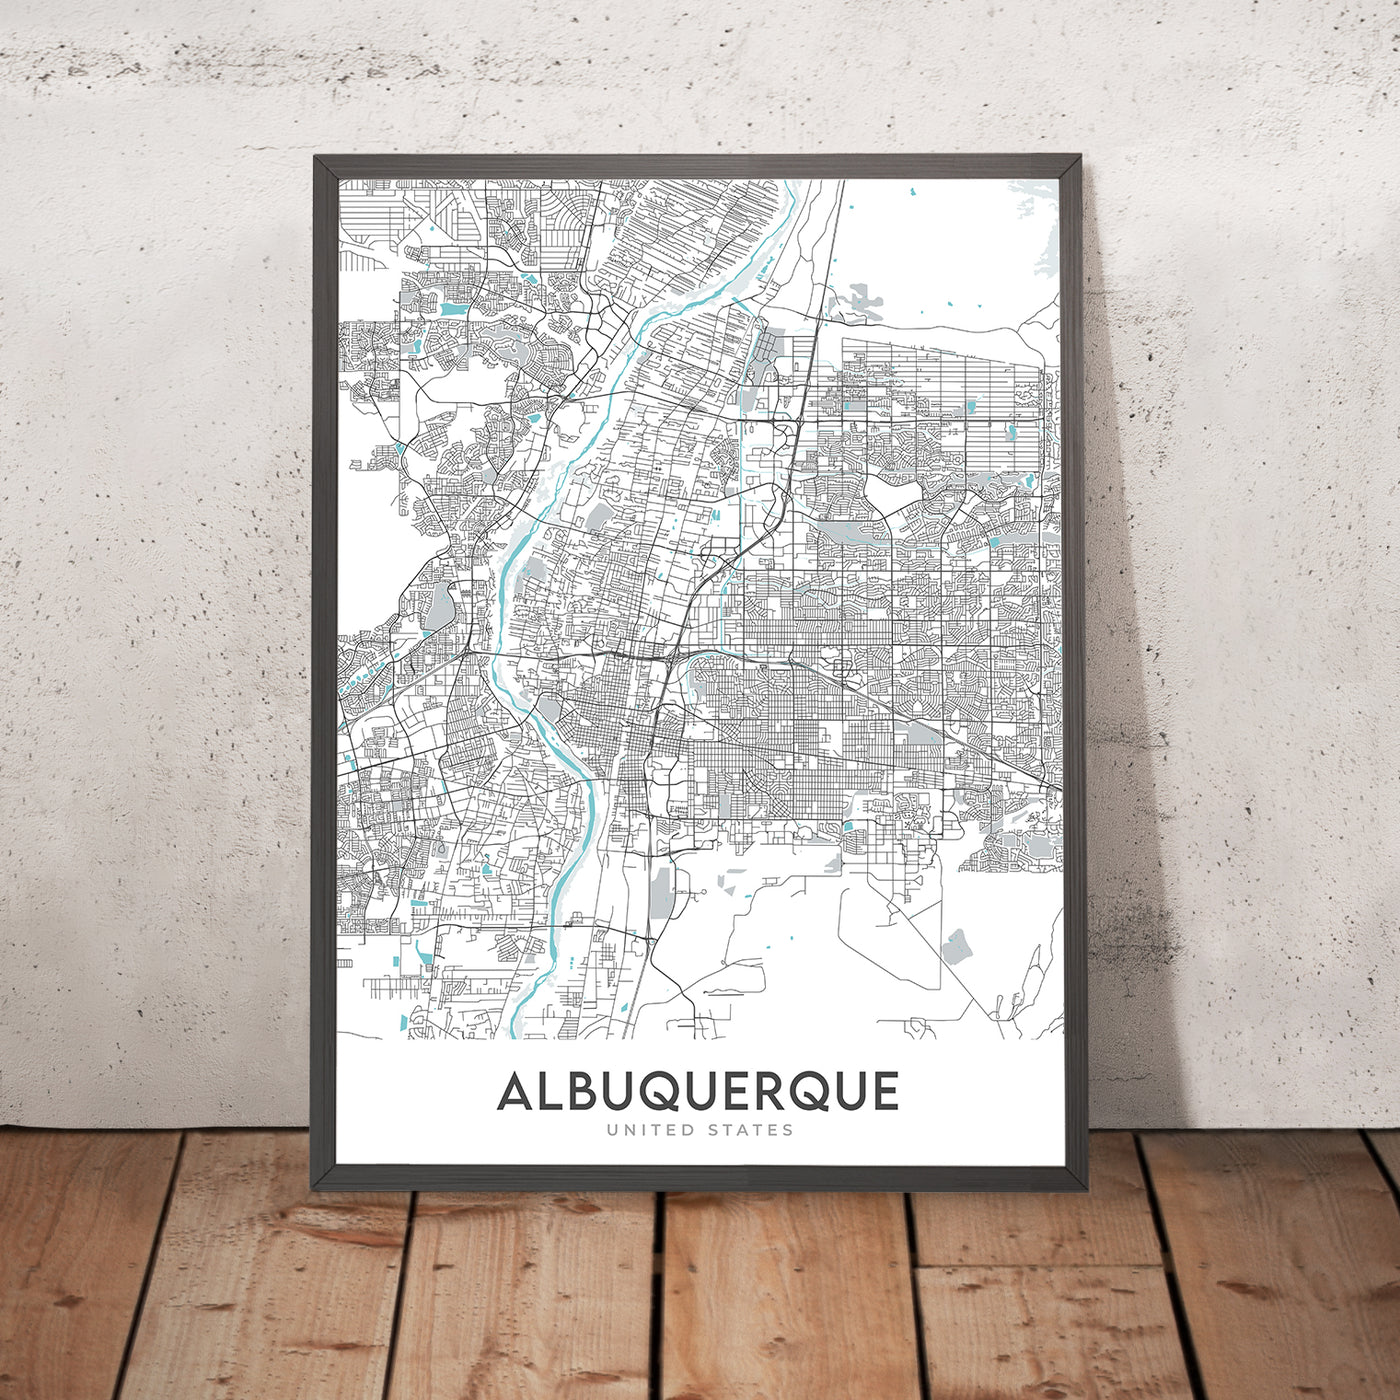 Modern City Map of Albuquerque, NM: Downtown, Old Town, University of New Mexico, Sandia Mountains, Rio Grande